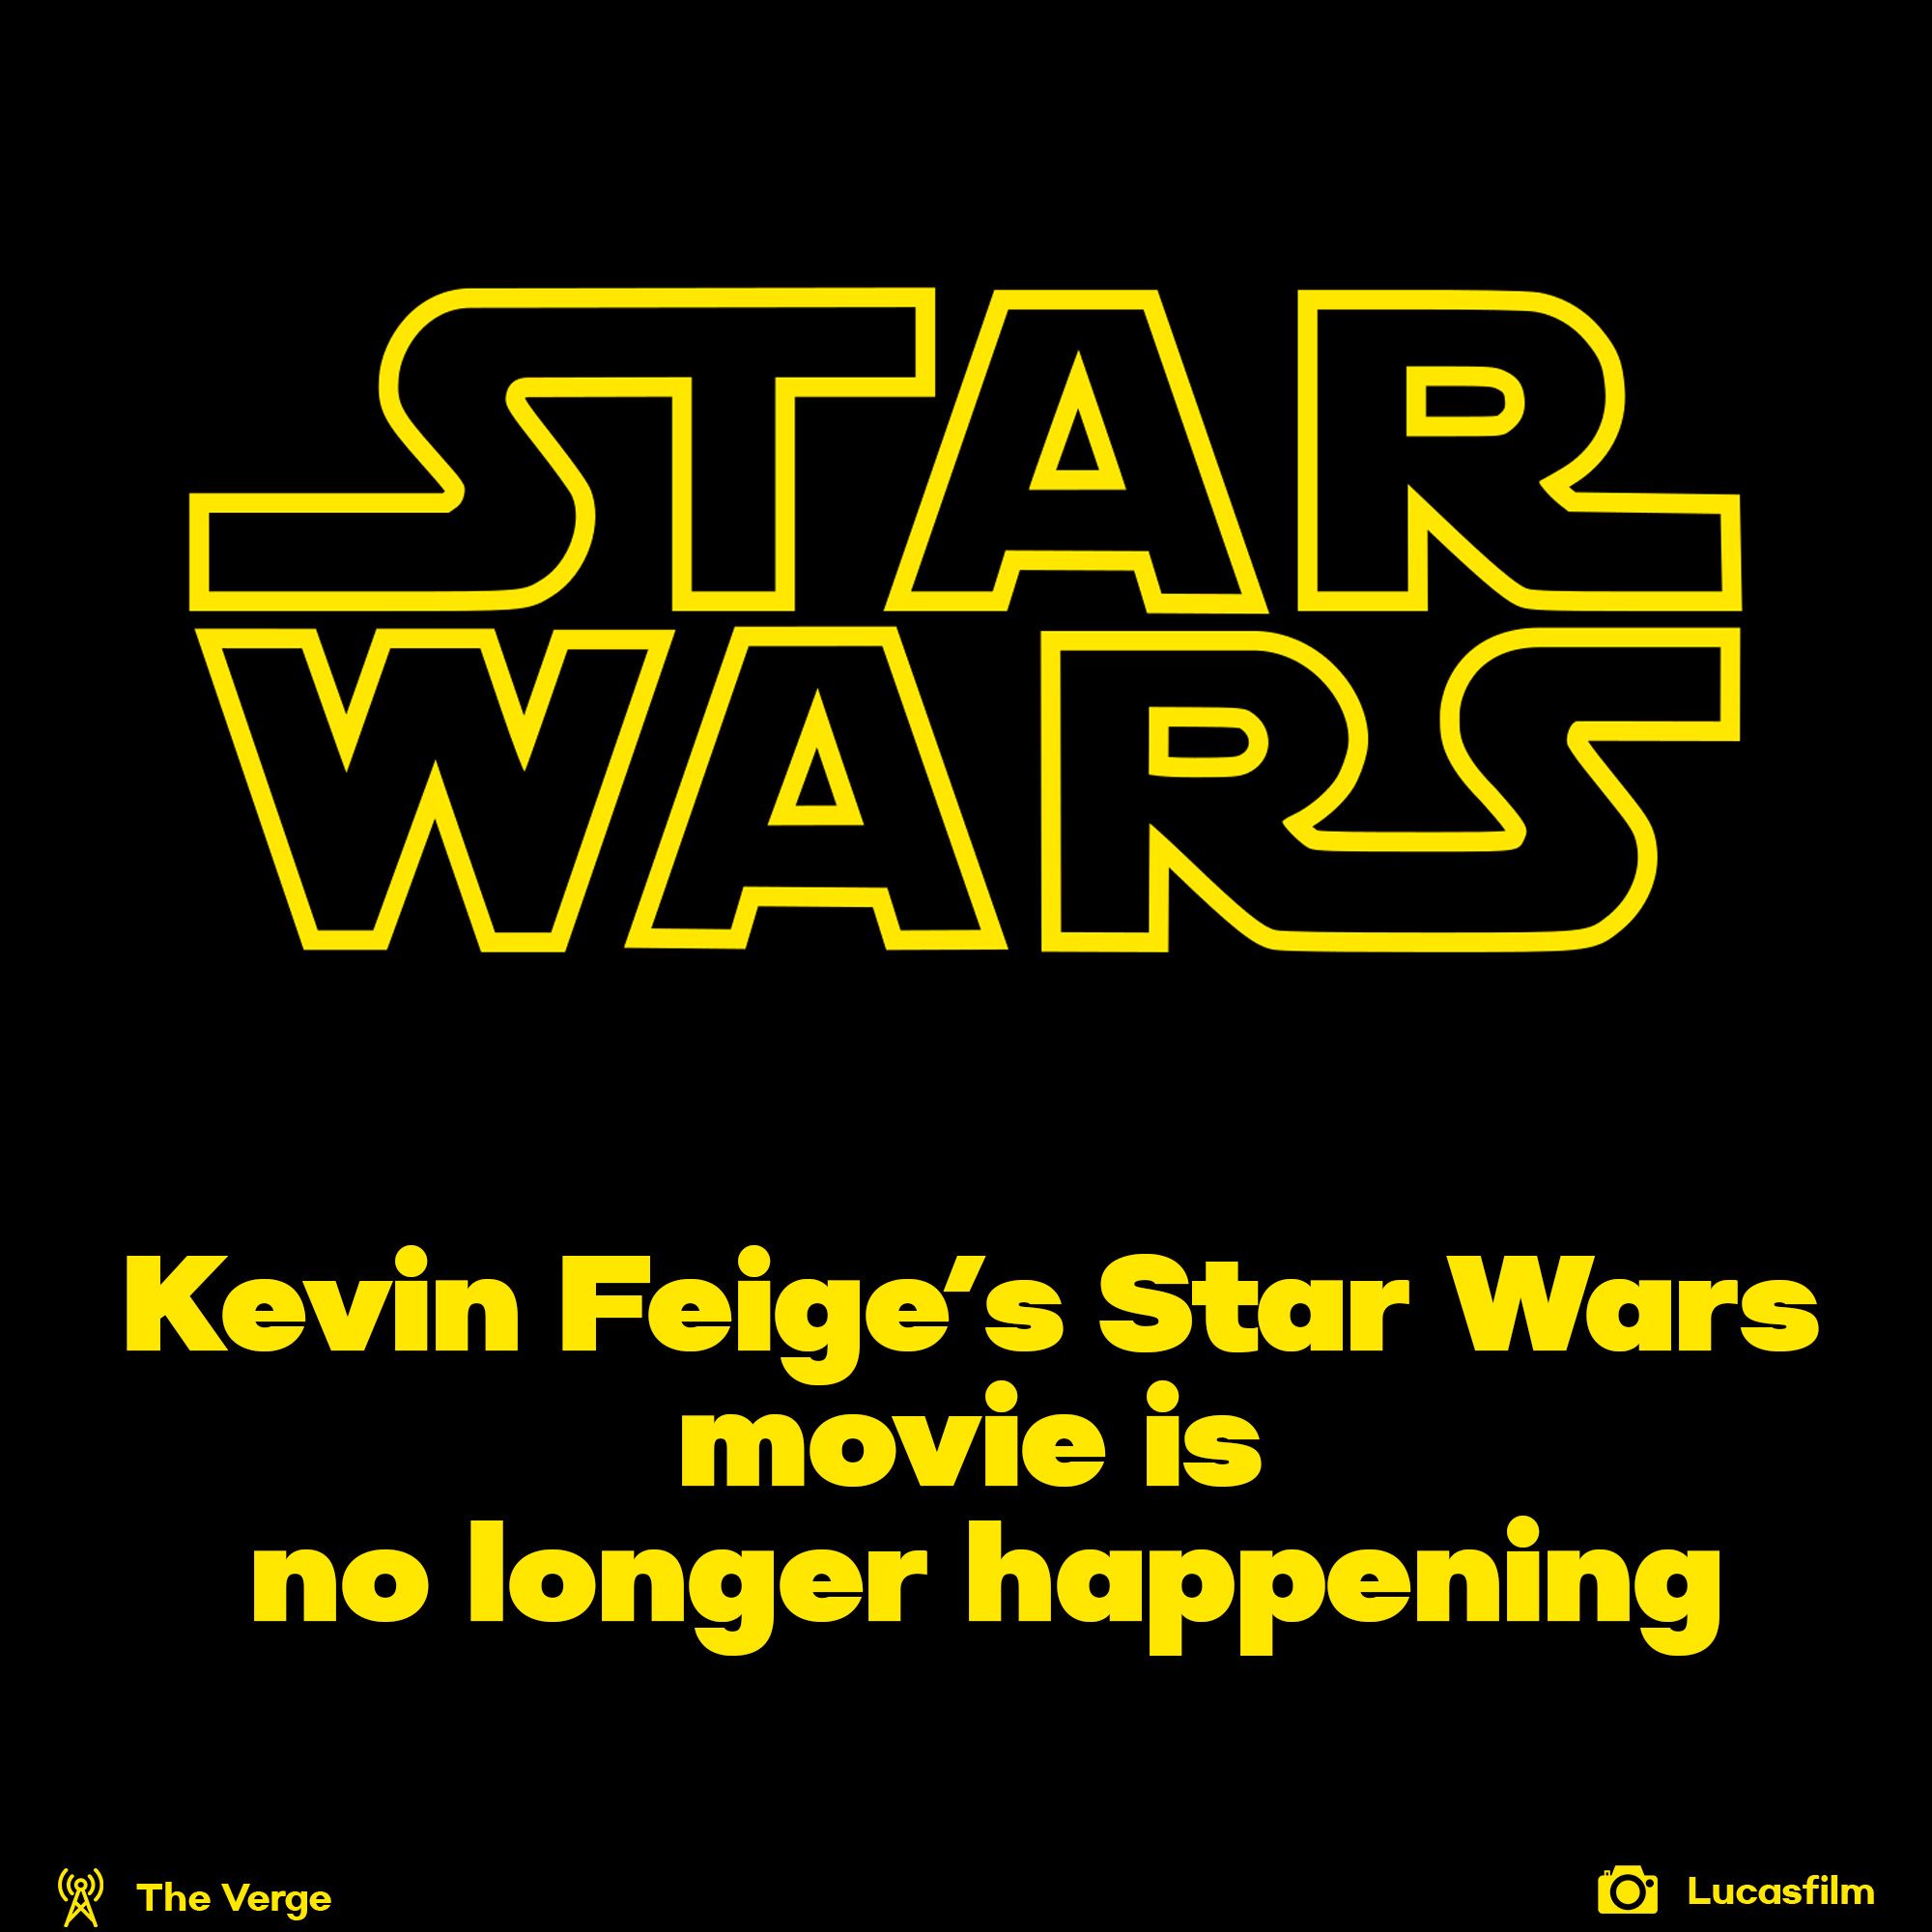 Kevin Feige's Star Wars movie no longer happening